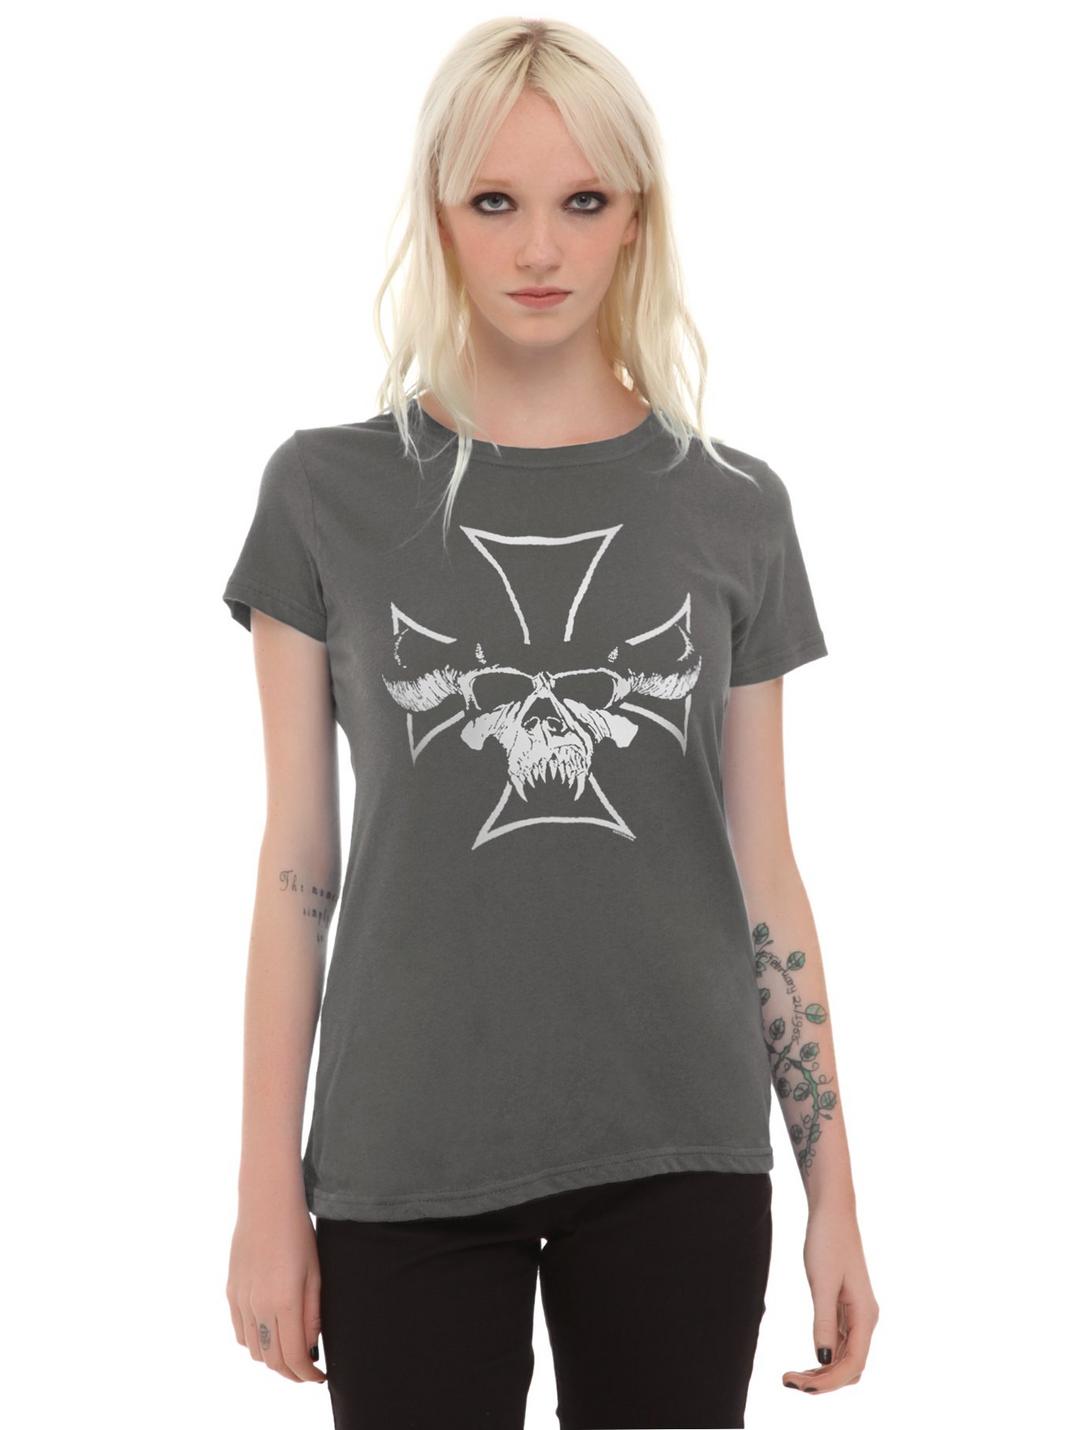 Danzig Iron Cross Logo Girls T-Shirt, BLACK, hi-res